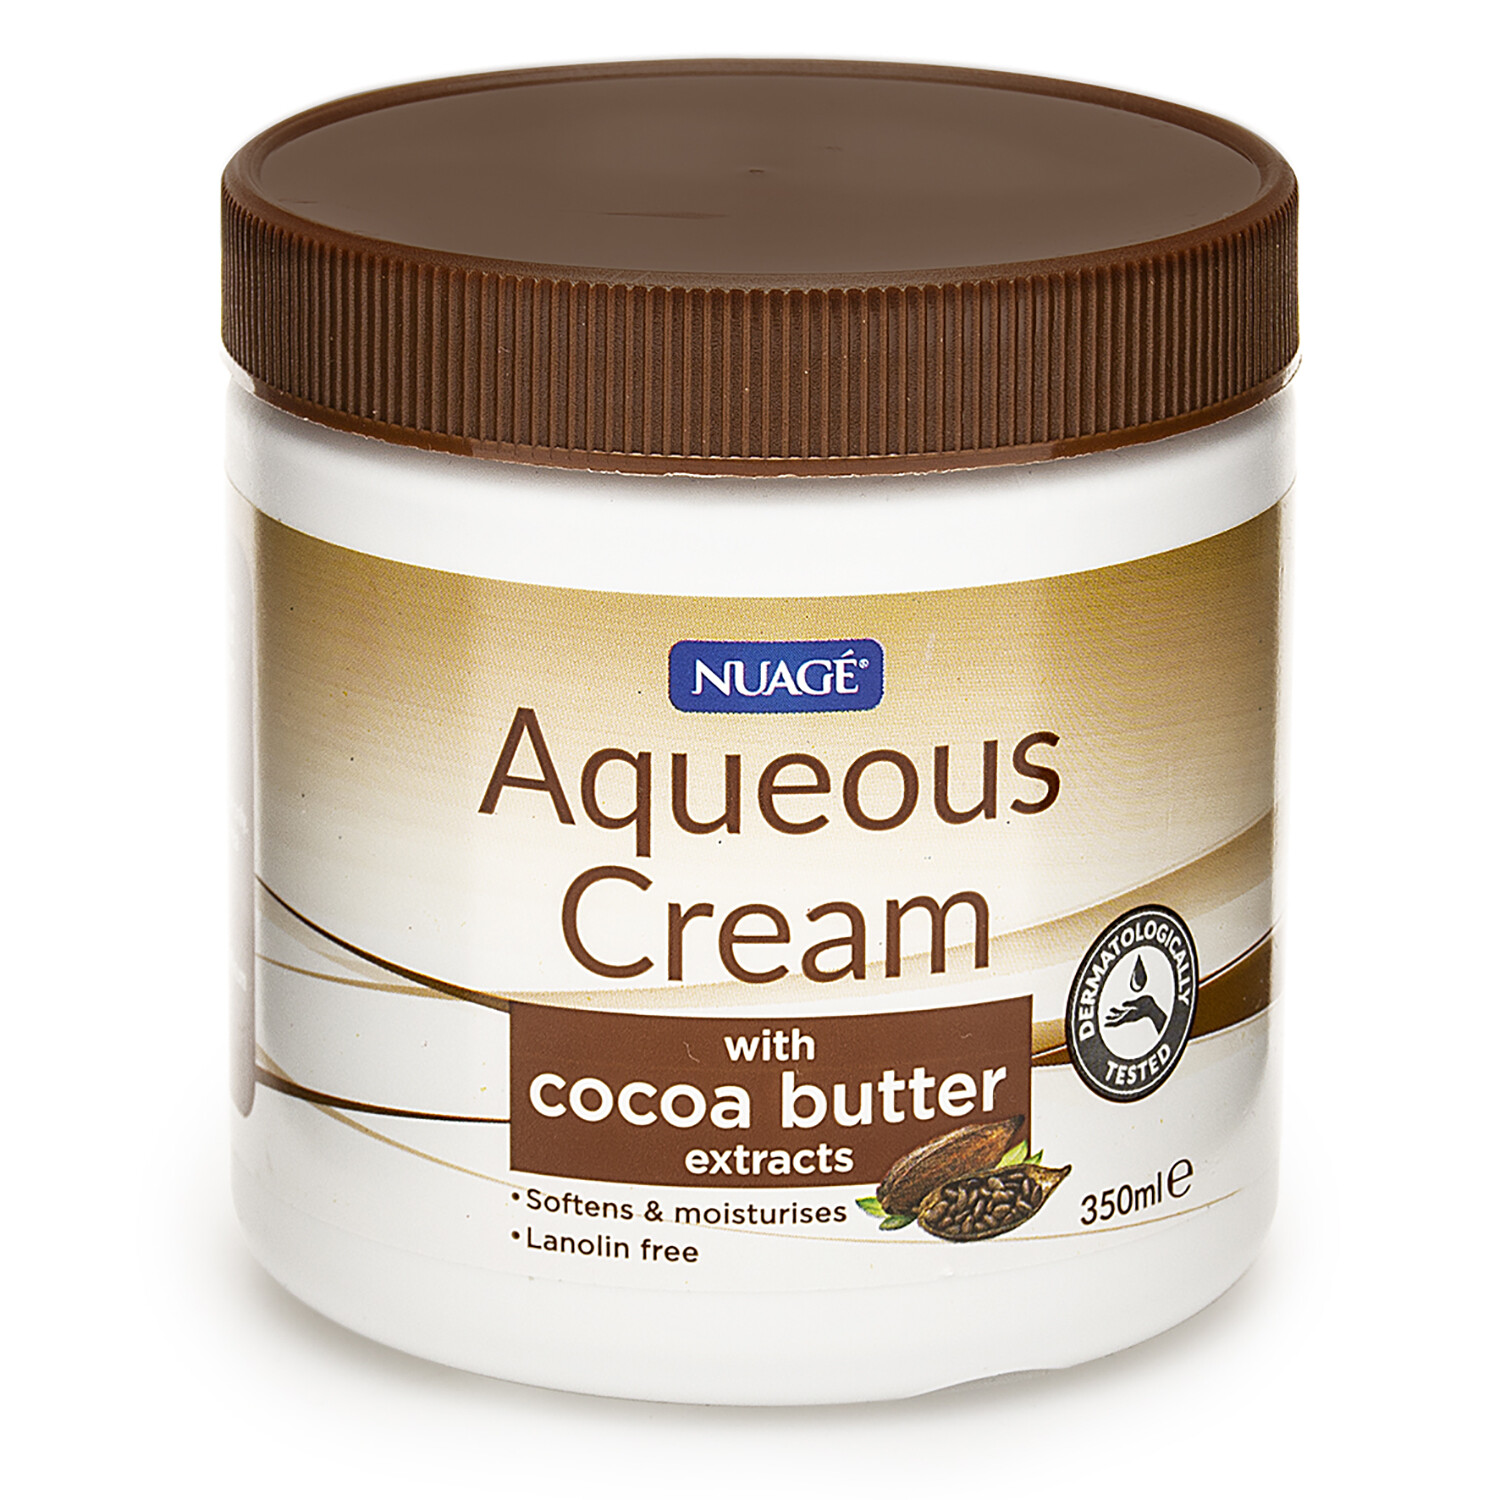 Nuage Aqueous Cream with Cocoa Butter 350ml Image